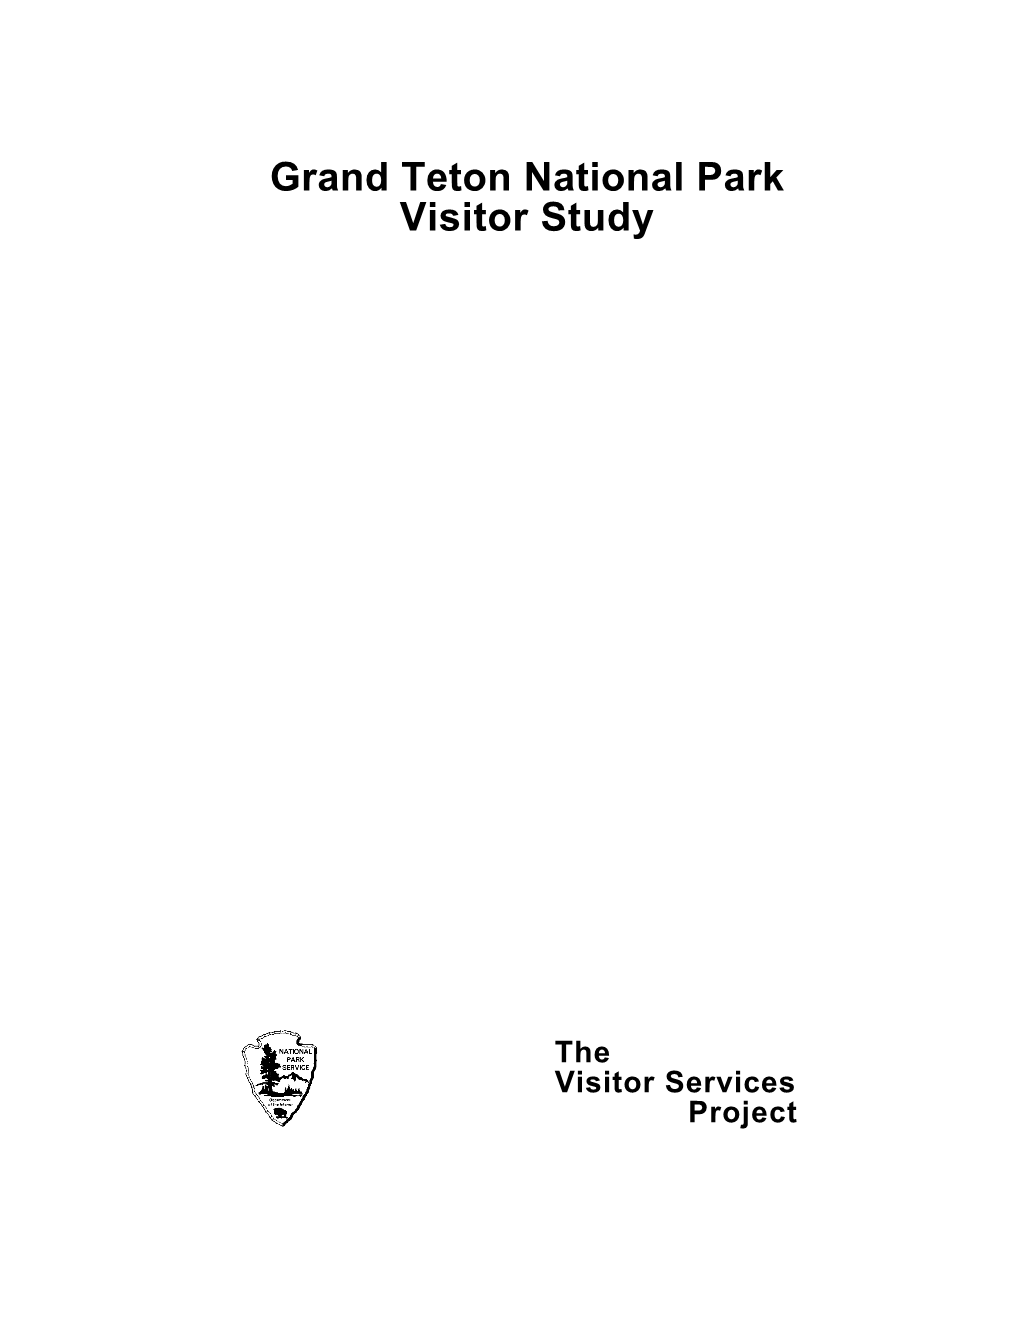 Grand Teton National Park Visitor Study